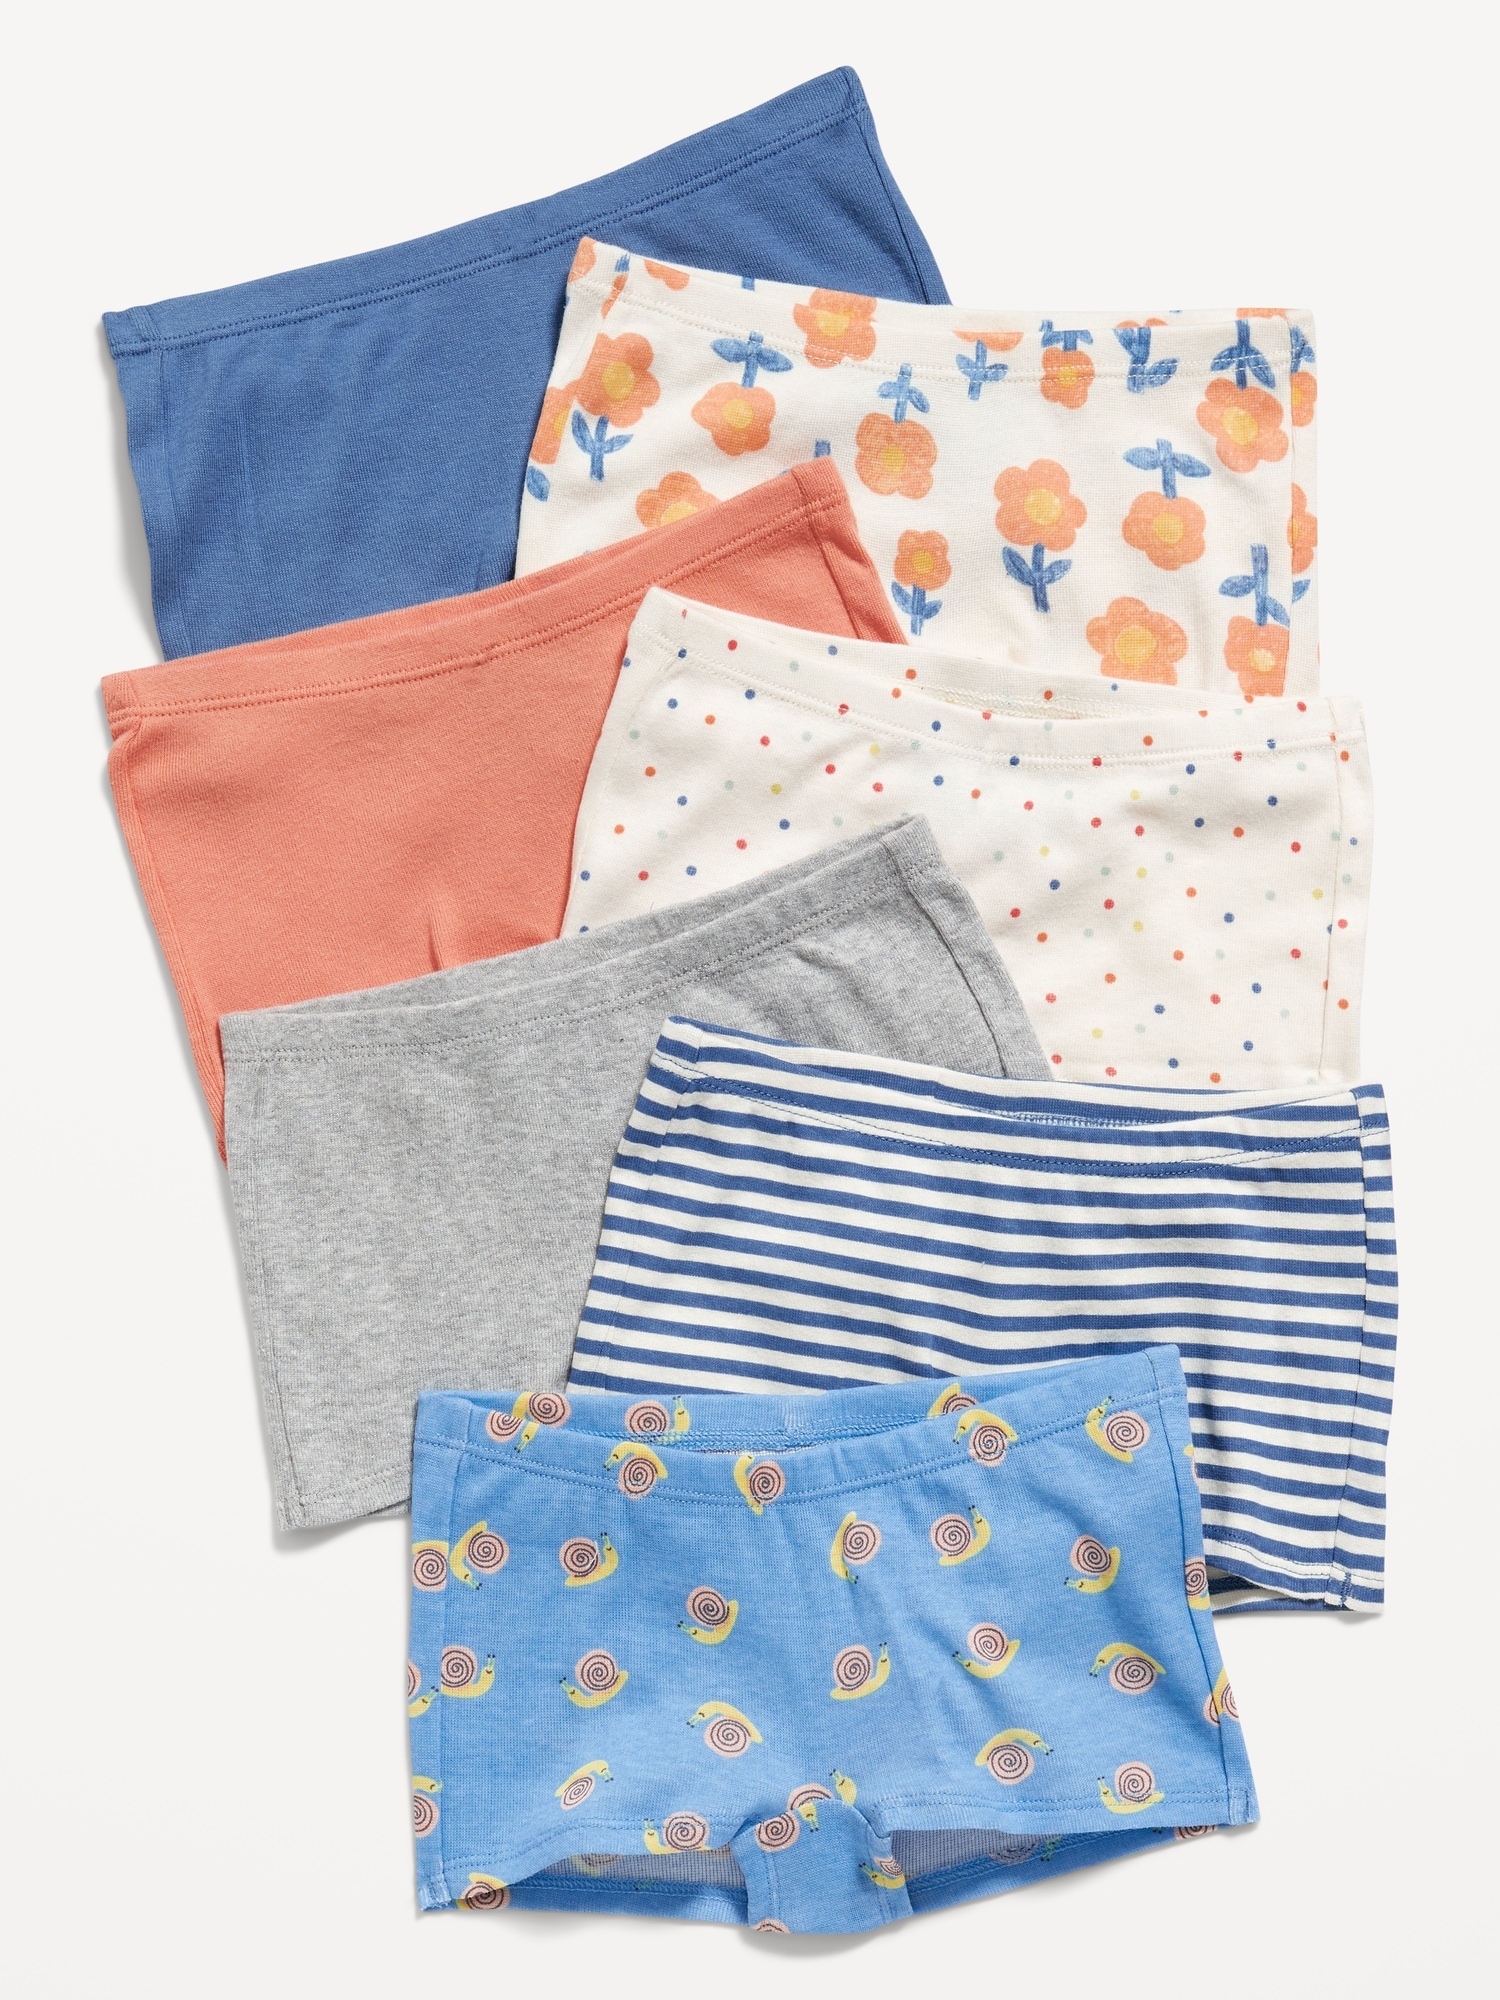 Old Navy Boyshorts Underwear 7-Pack for Toddler Girls green. 1